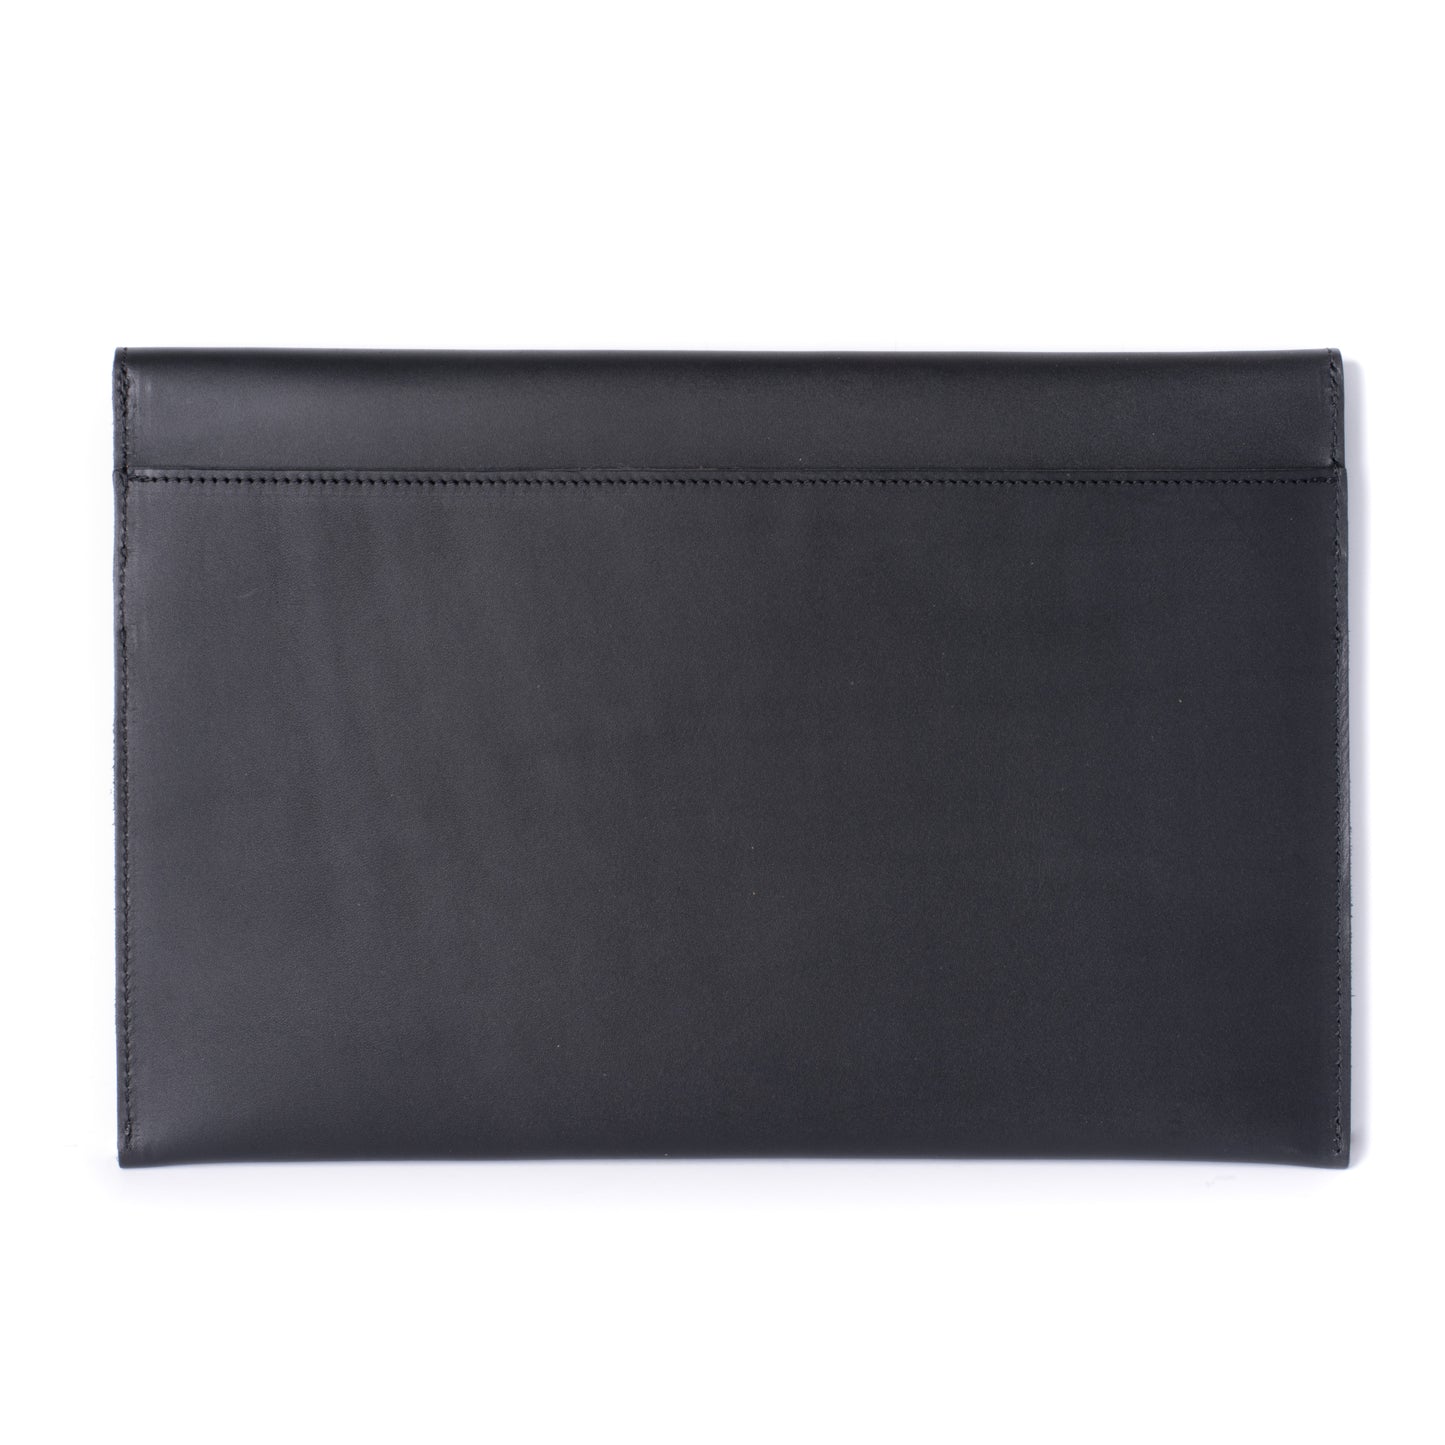 Leather MacBook Envelope Case - Midnight